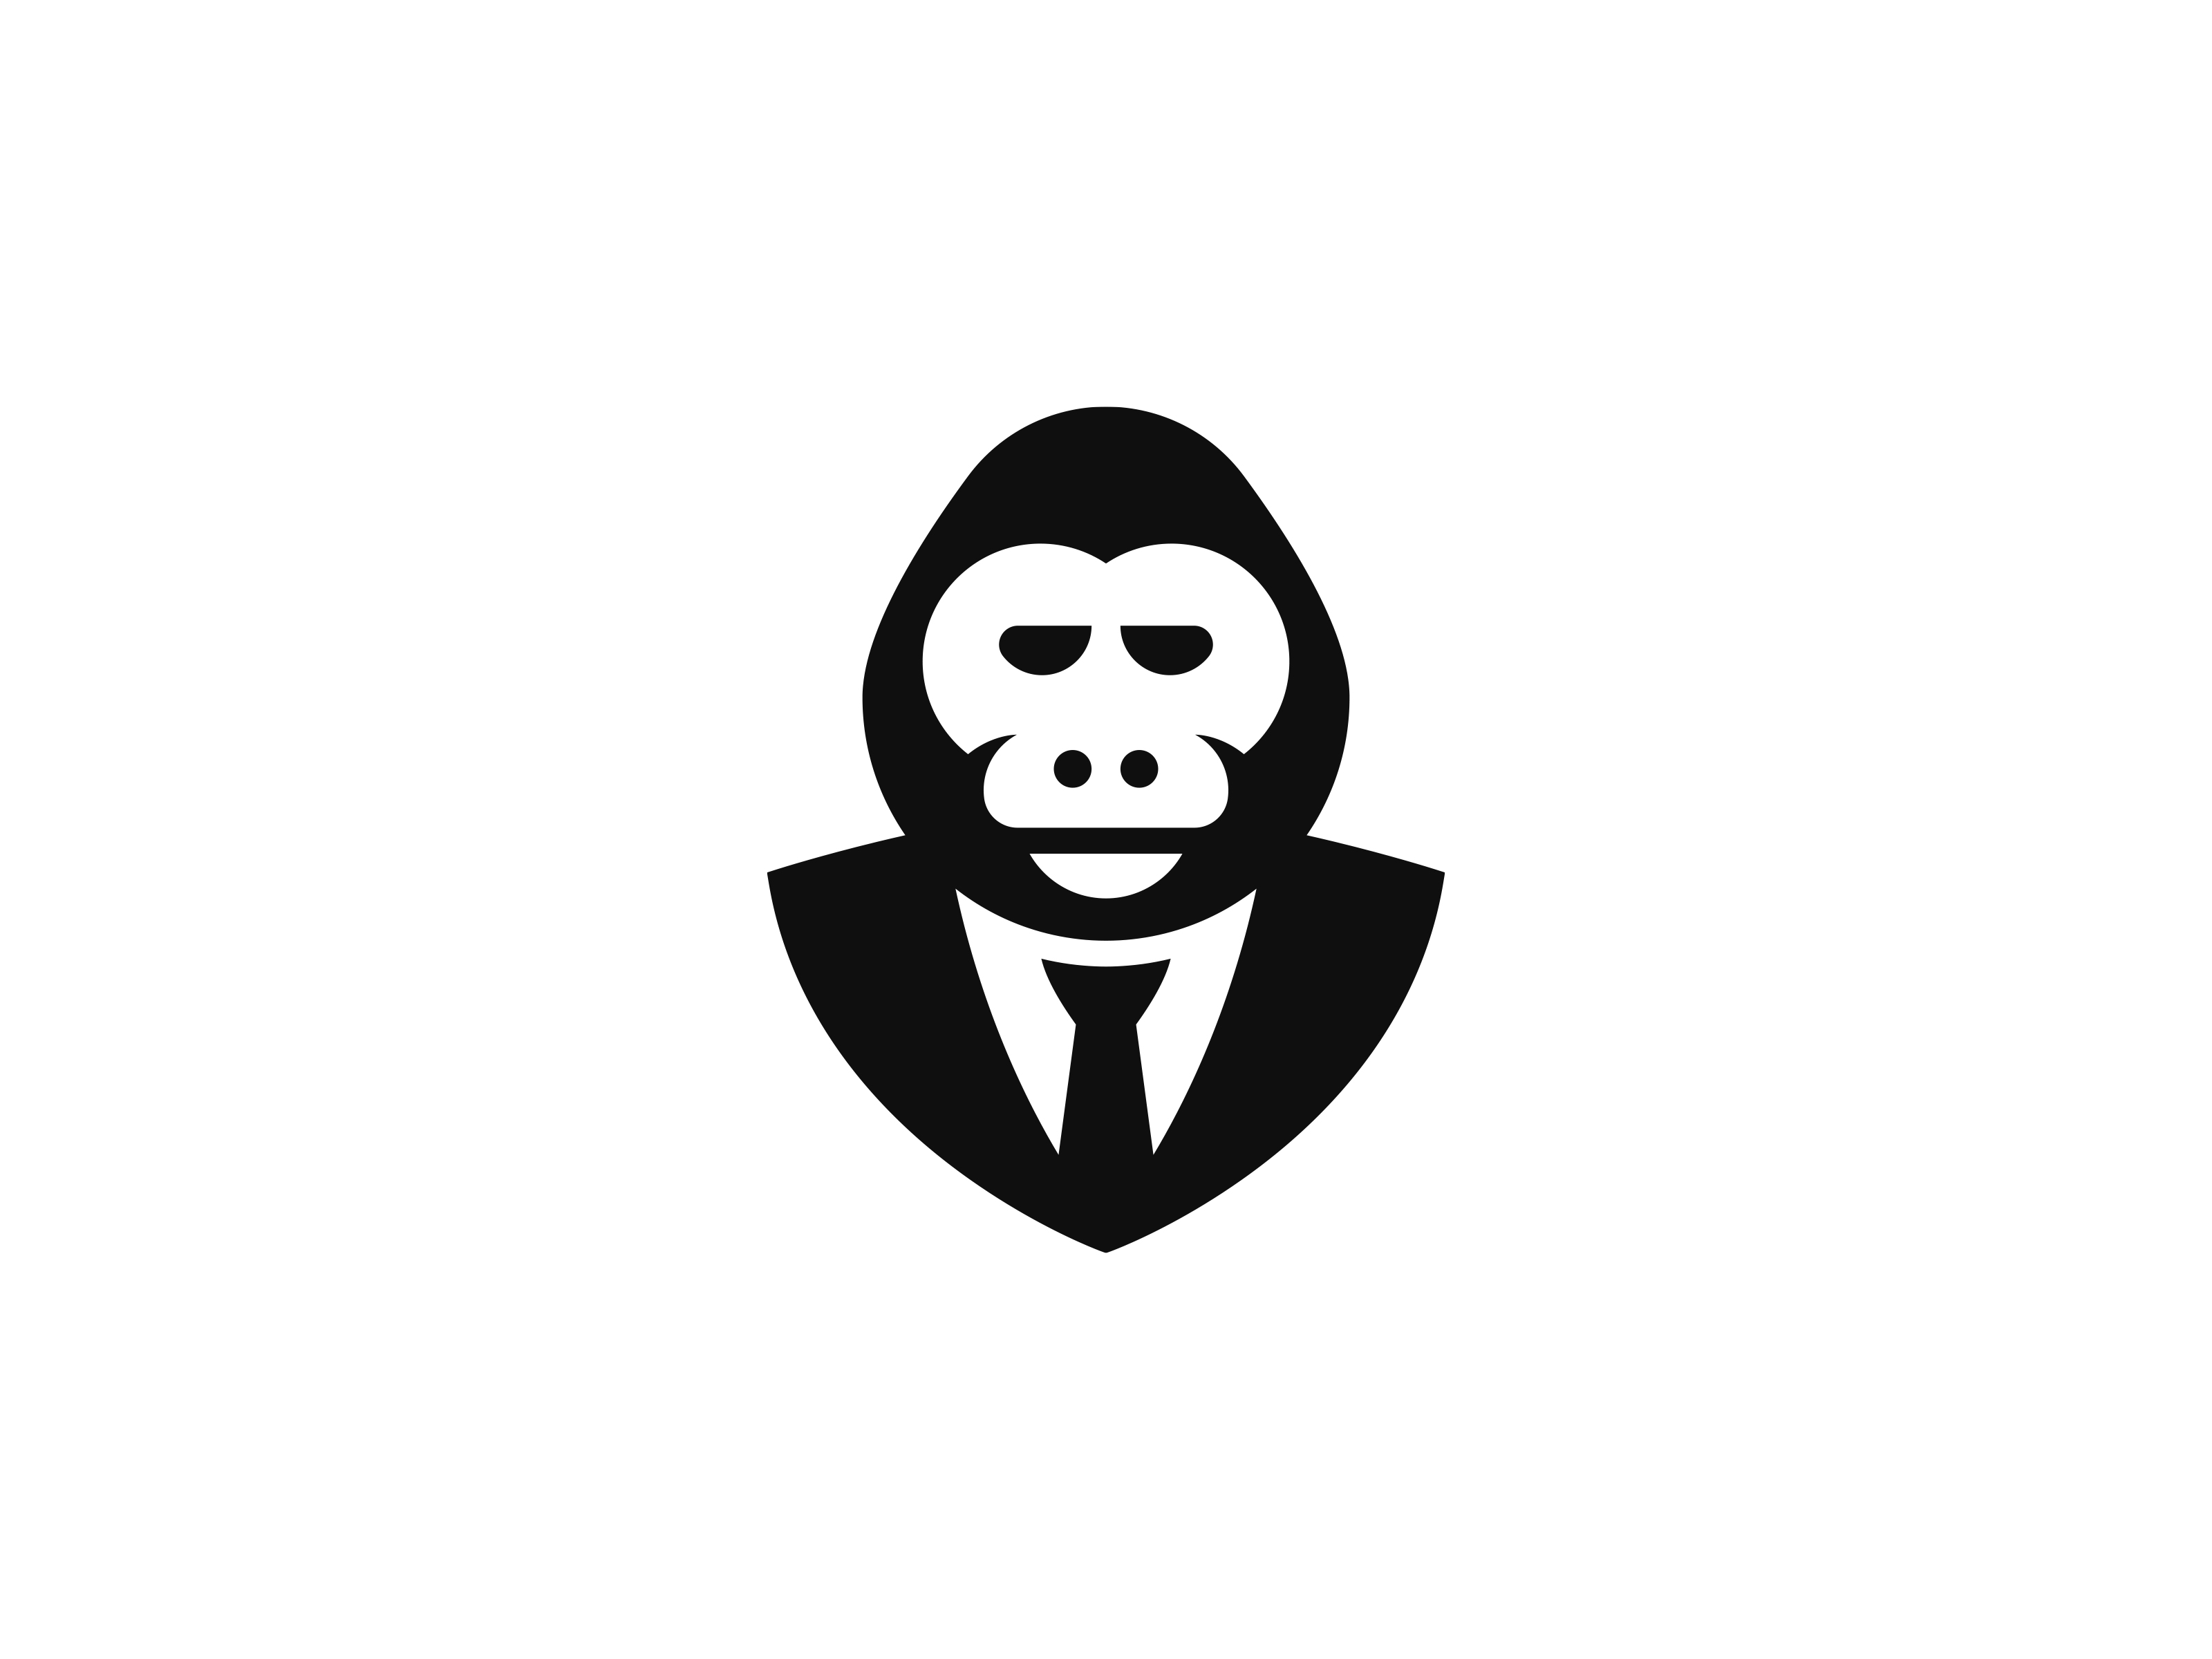 Behave Yourself - Logo Design animal ape branding face freelance logo design freelance logo designer gorilla icon identity logo logo design logo designer minimal monkey simple suit tie